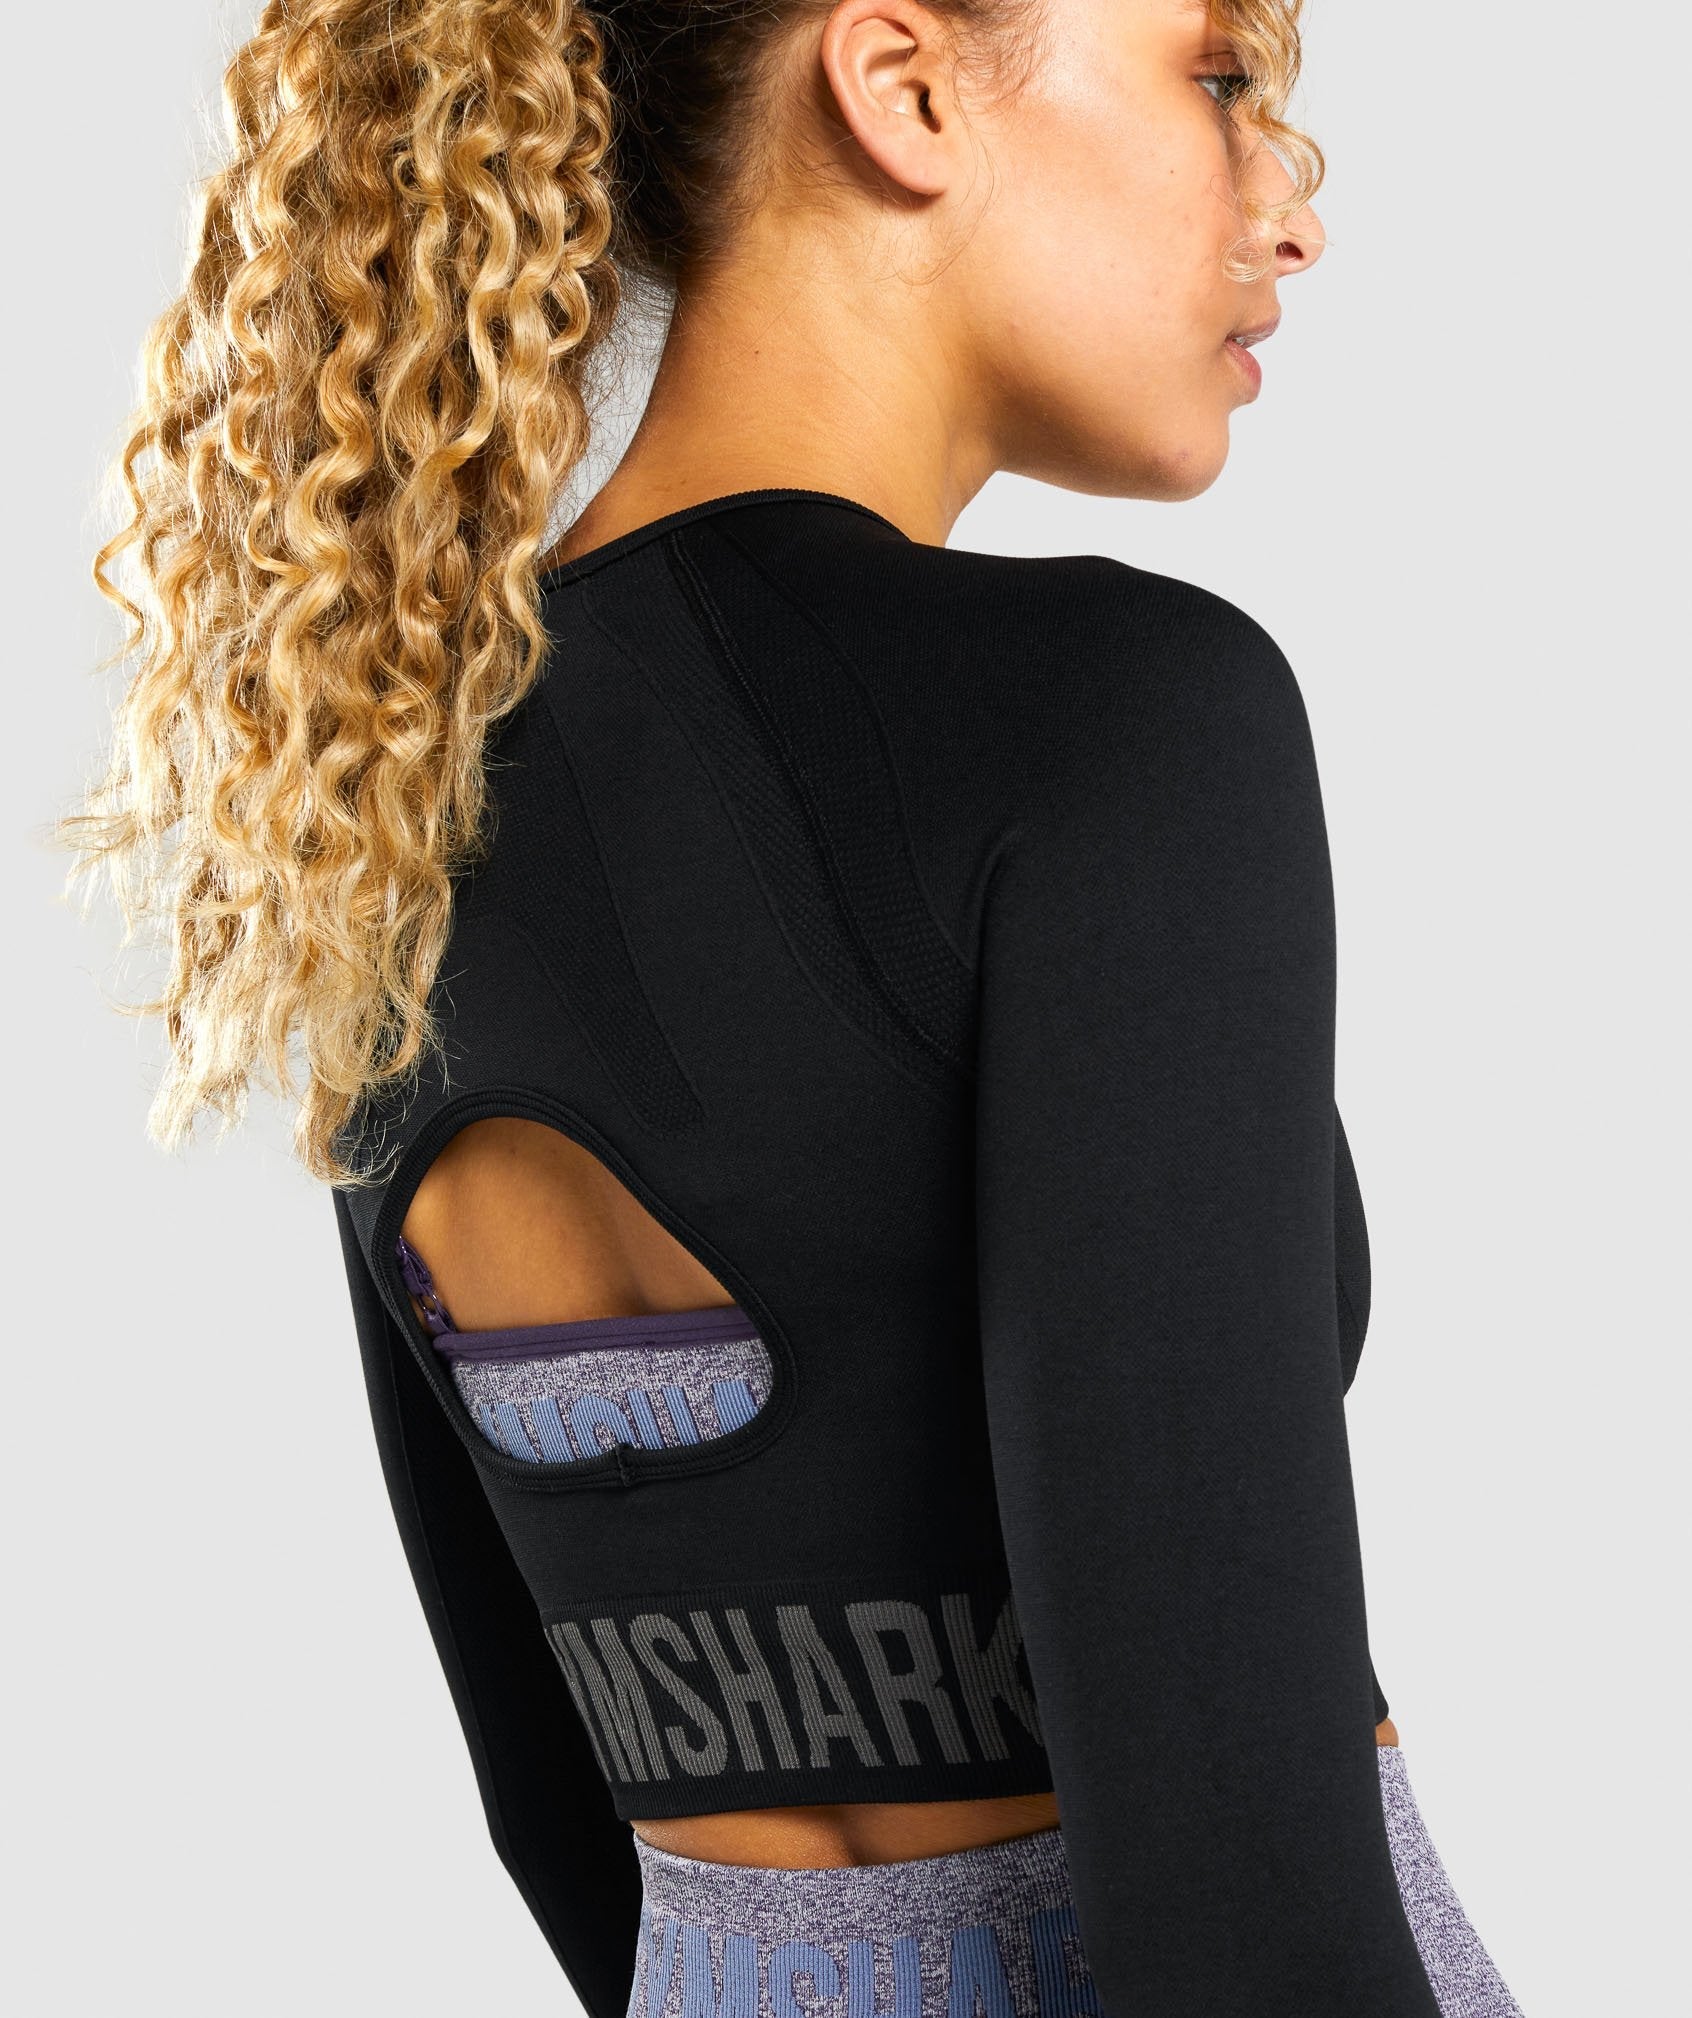 Gymshark flex sport long sleeve crop top Black Size XS - $29